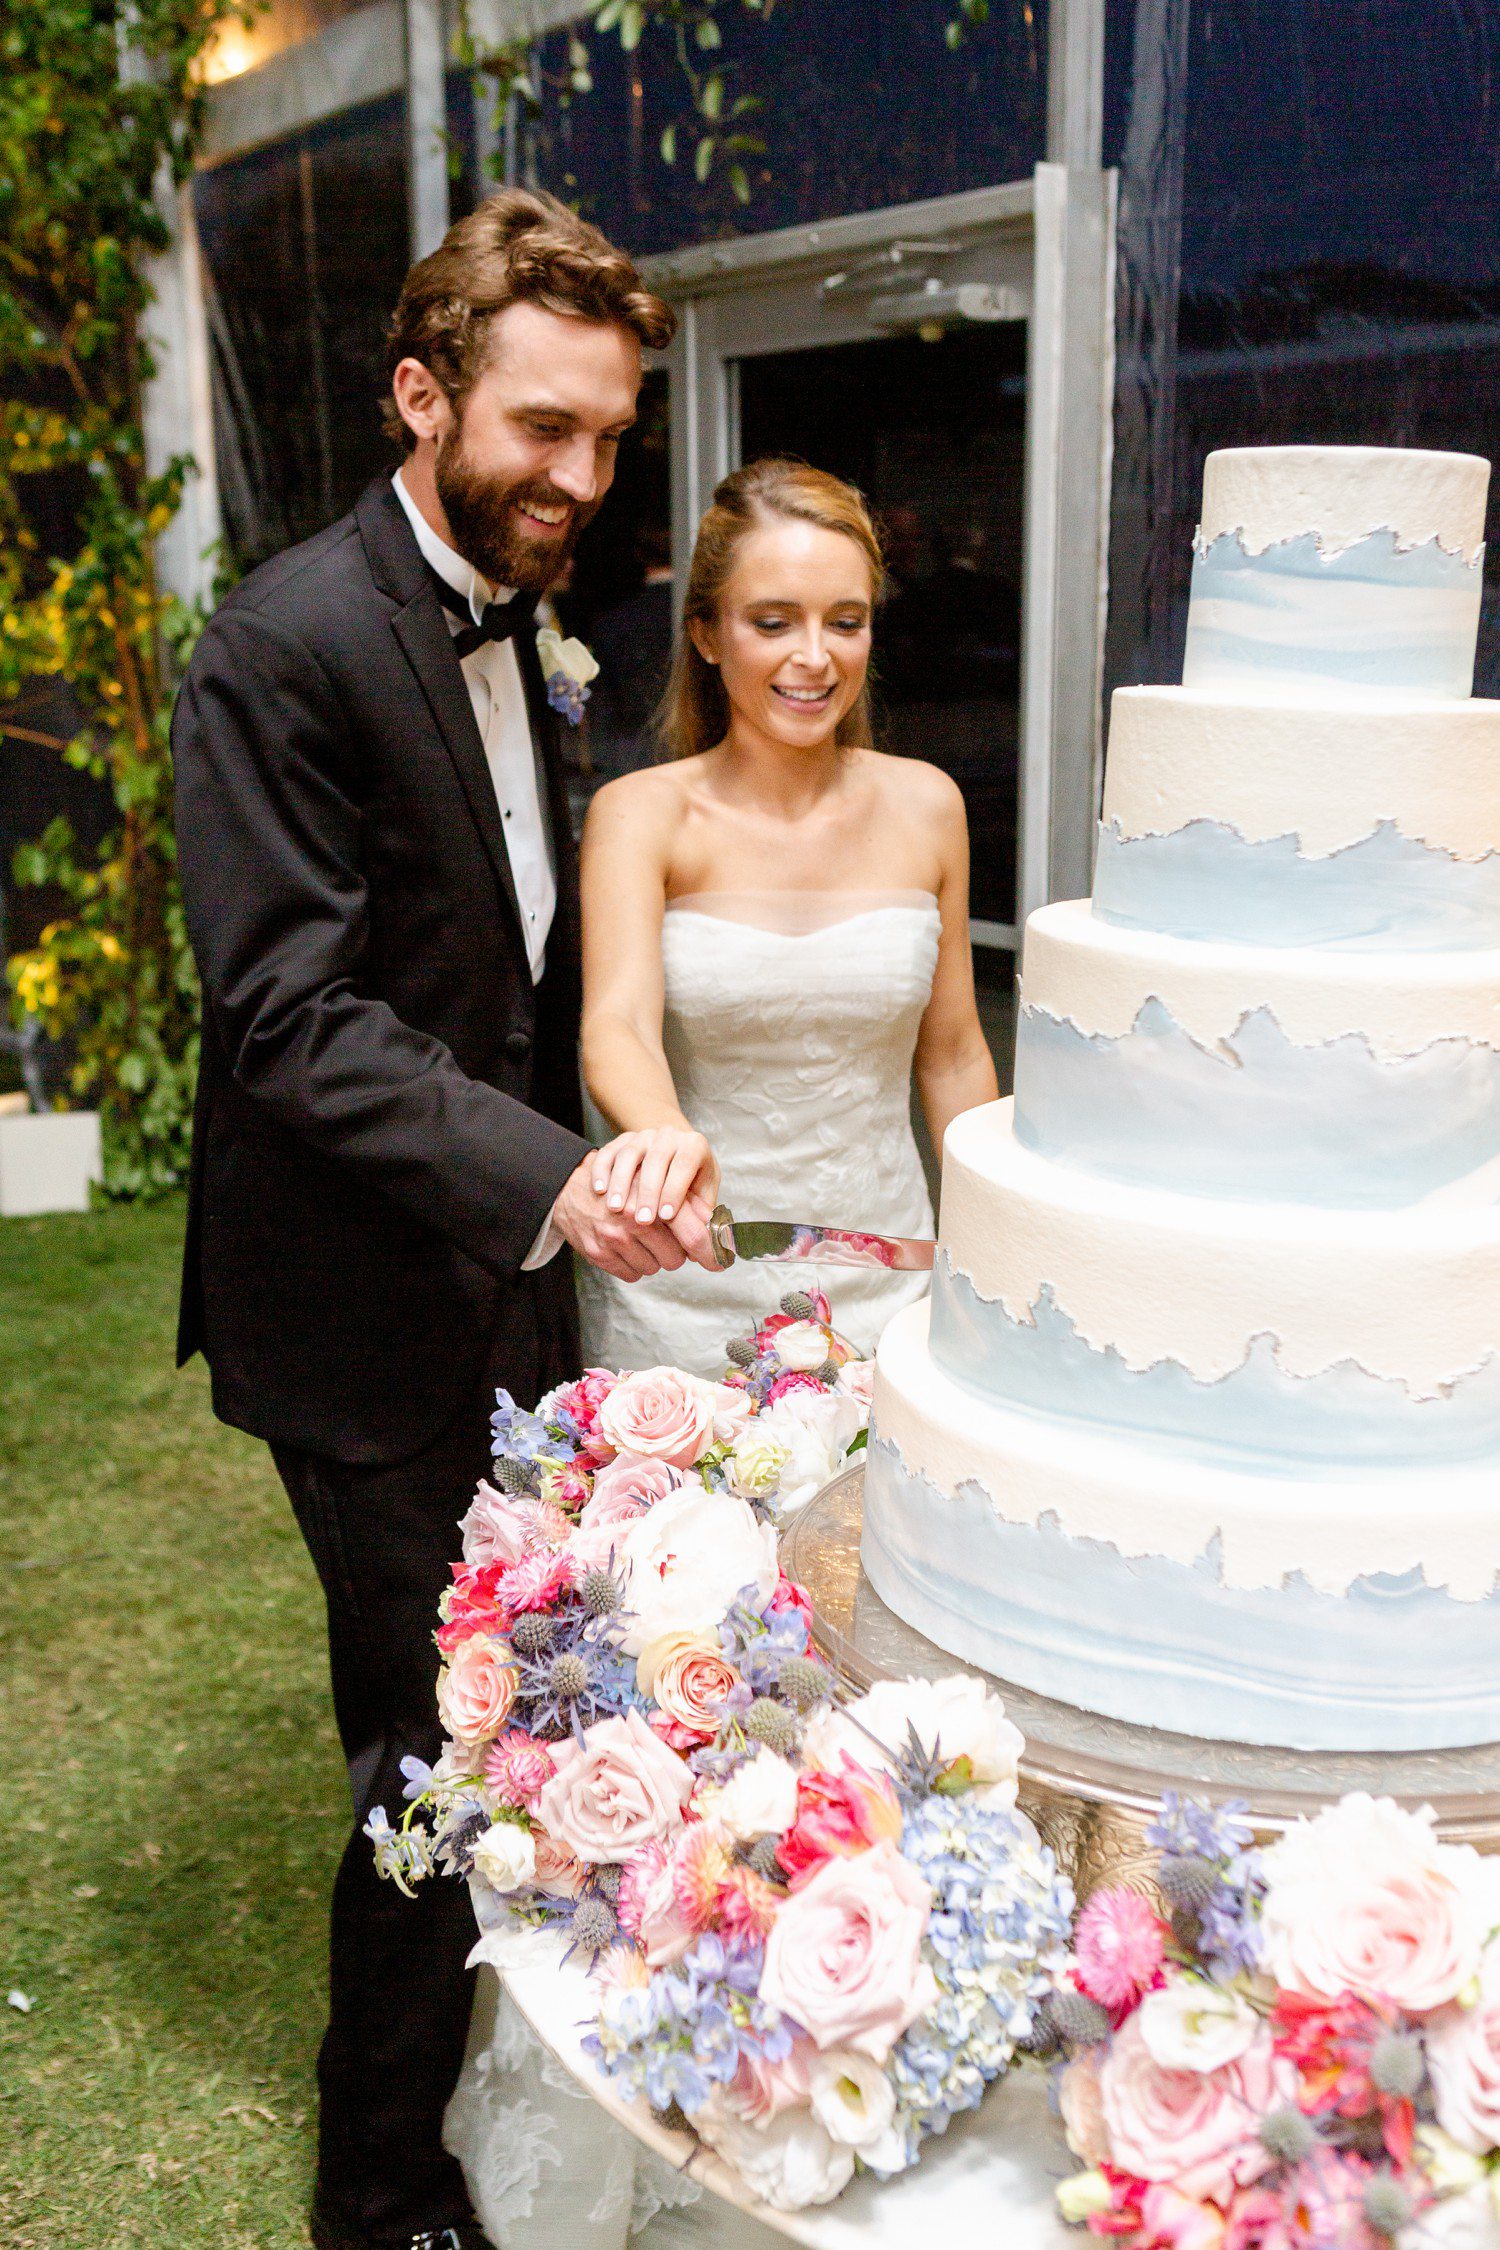 Bride and groom cutting blue wedding cake. 